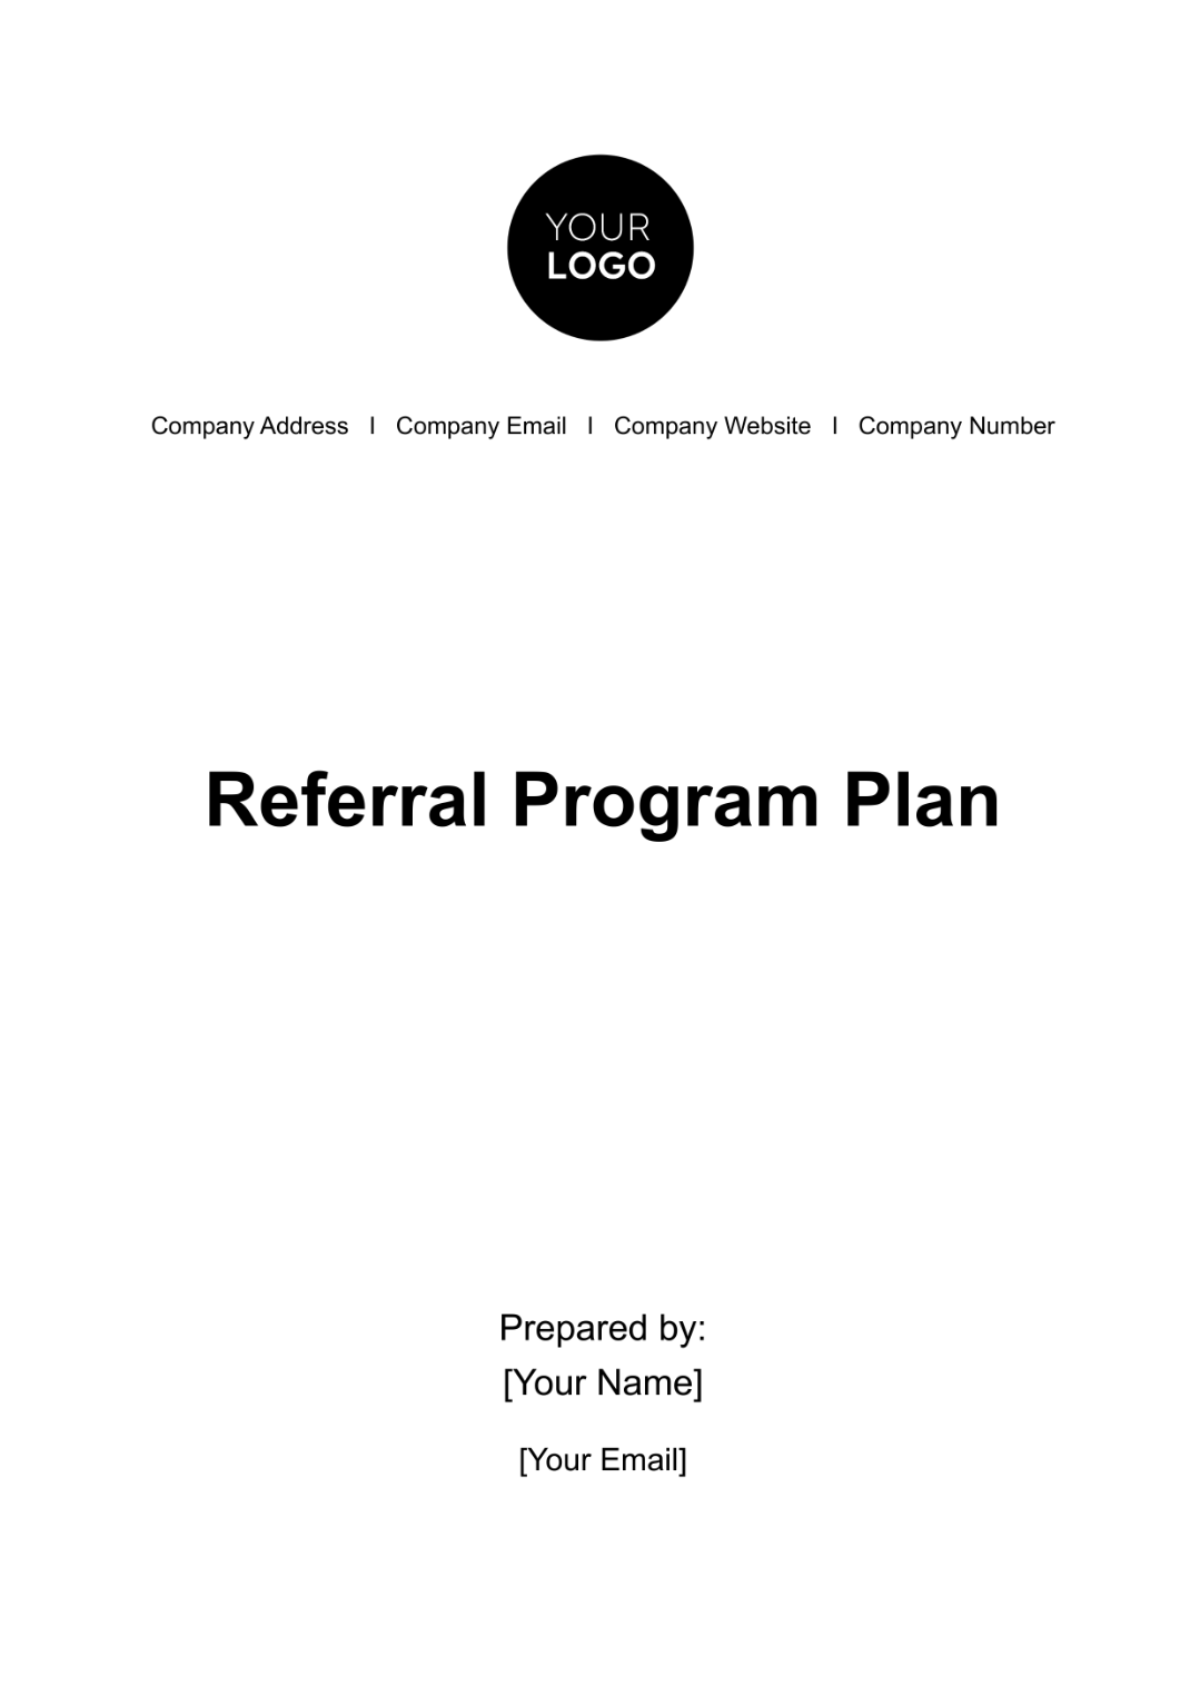 Free Referral Program Plan HR Template